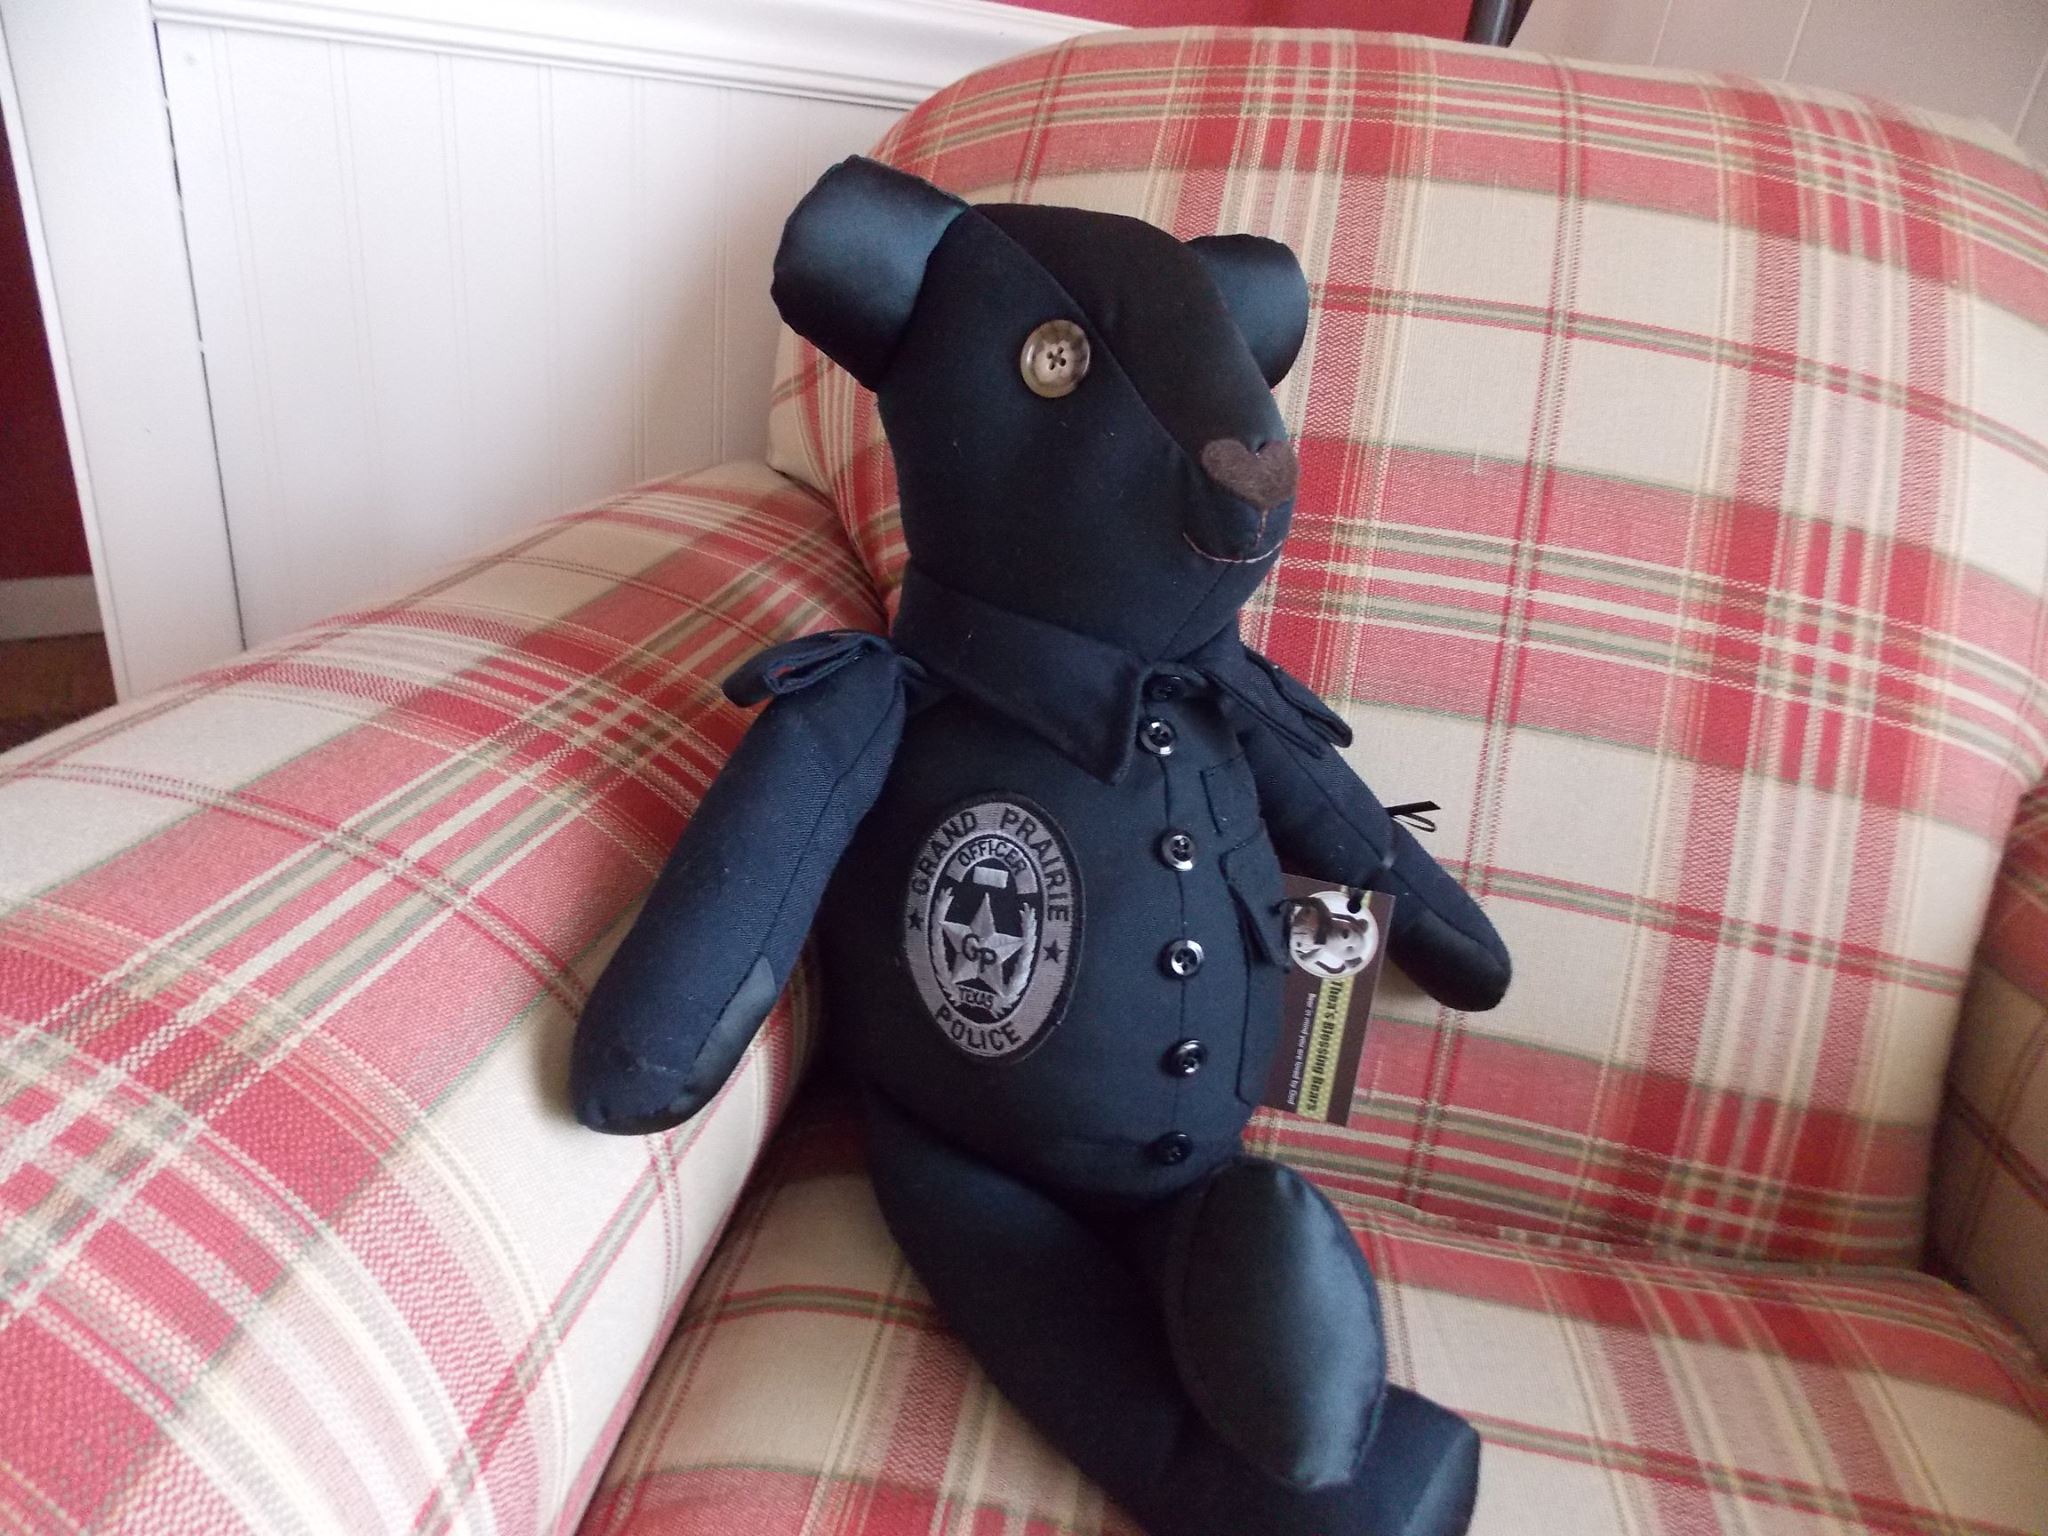 police bear.jpg